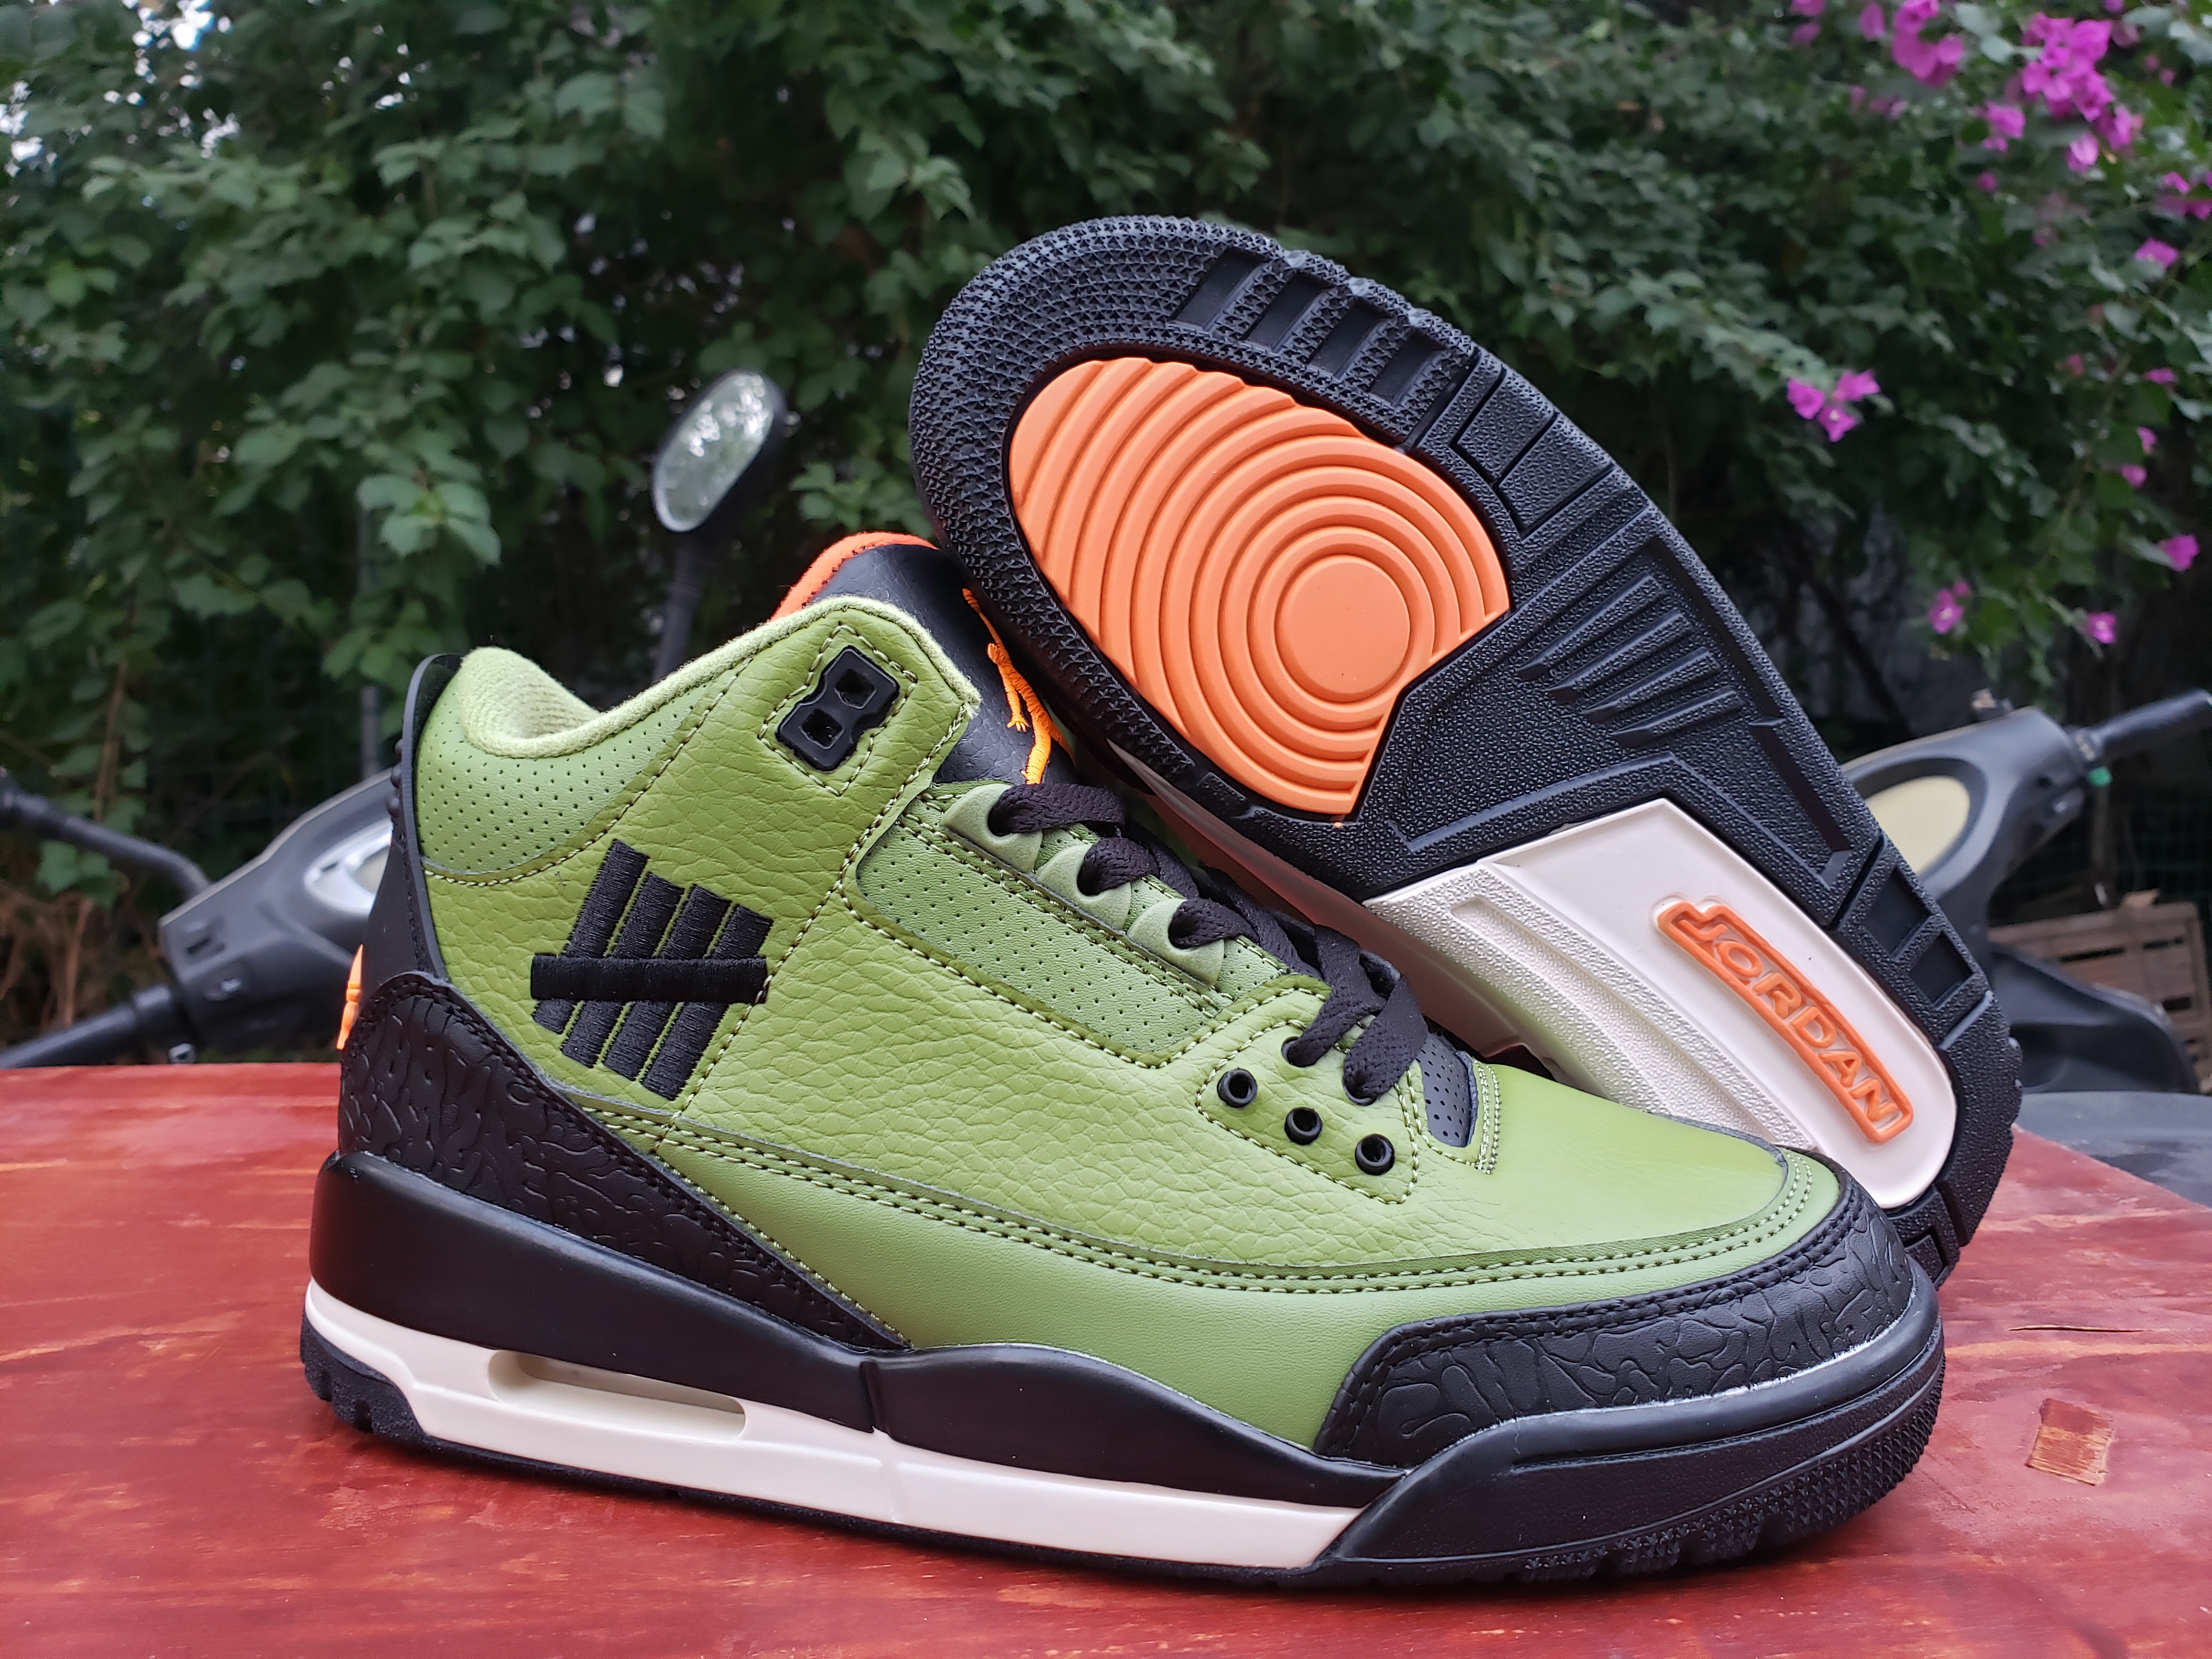 2020 Air Jordan 3 Olive Green Black Orange Shoes